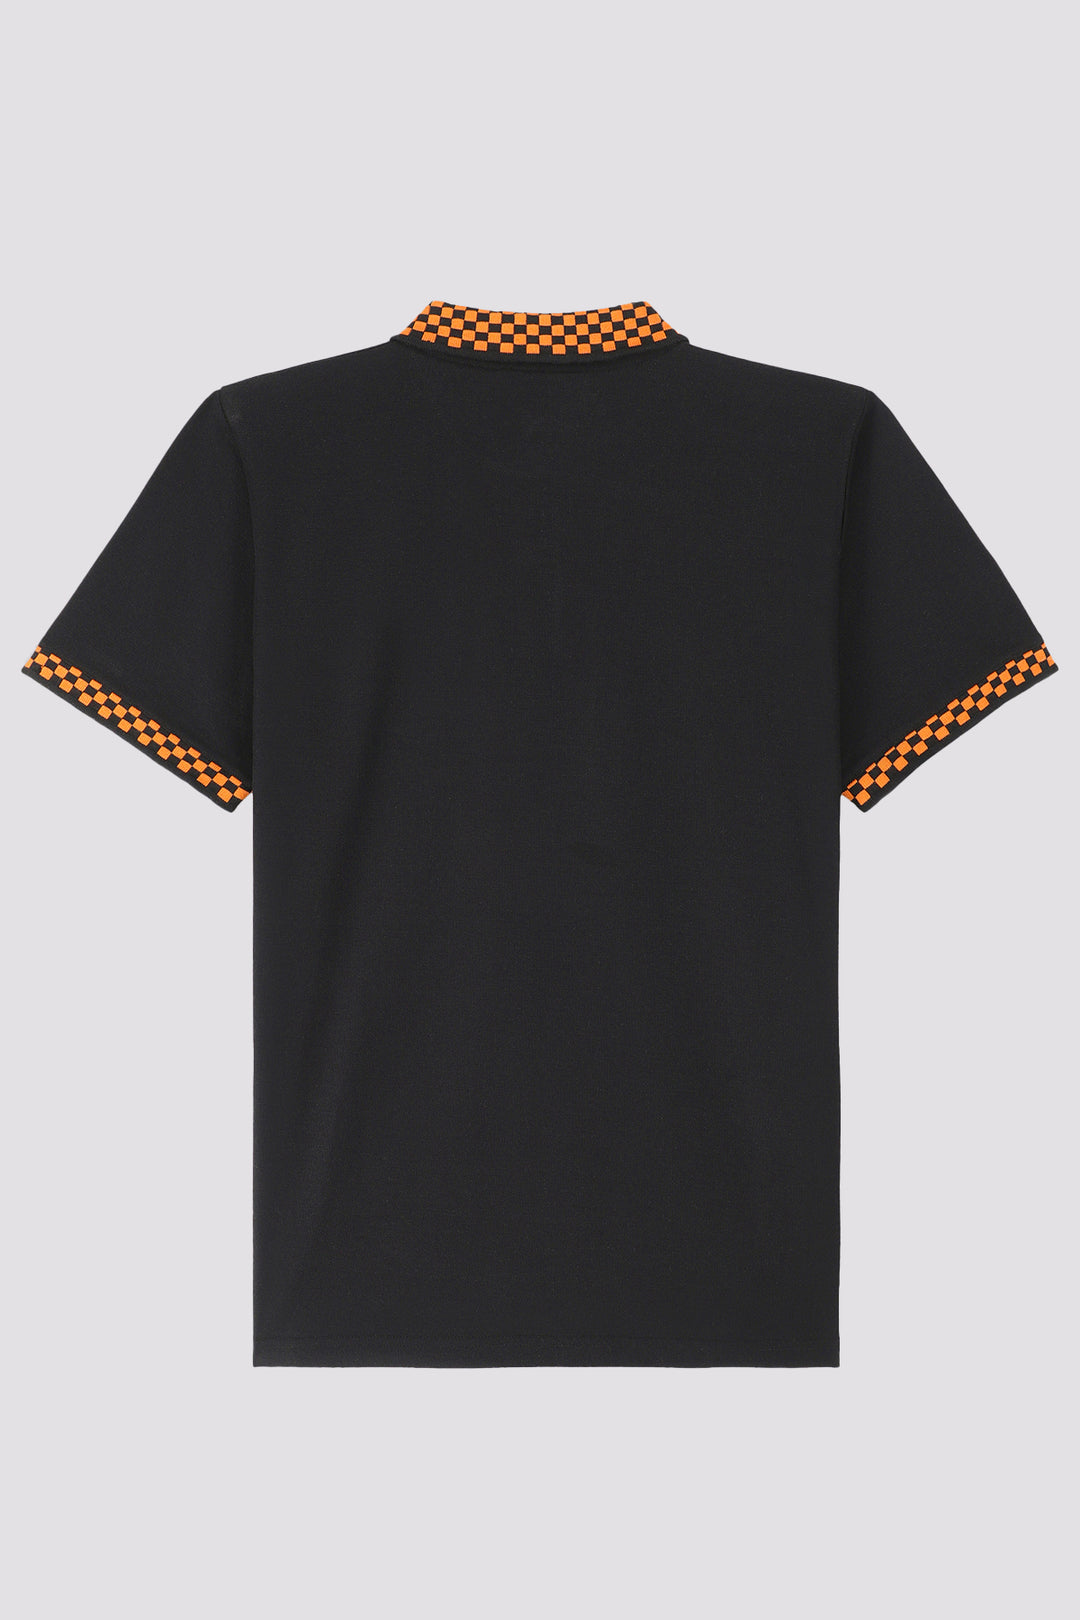 Black & Orange Jacquard Polo Shirt - A24 - MP0250R